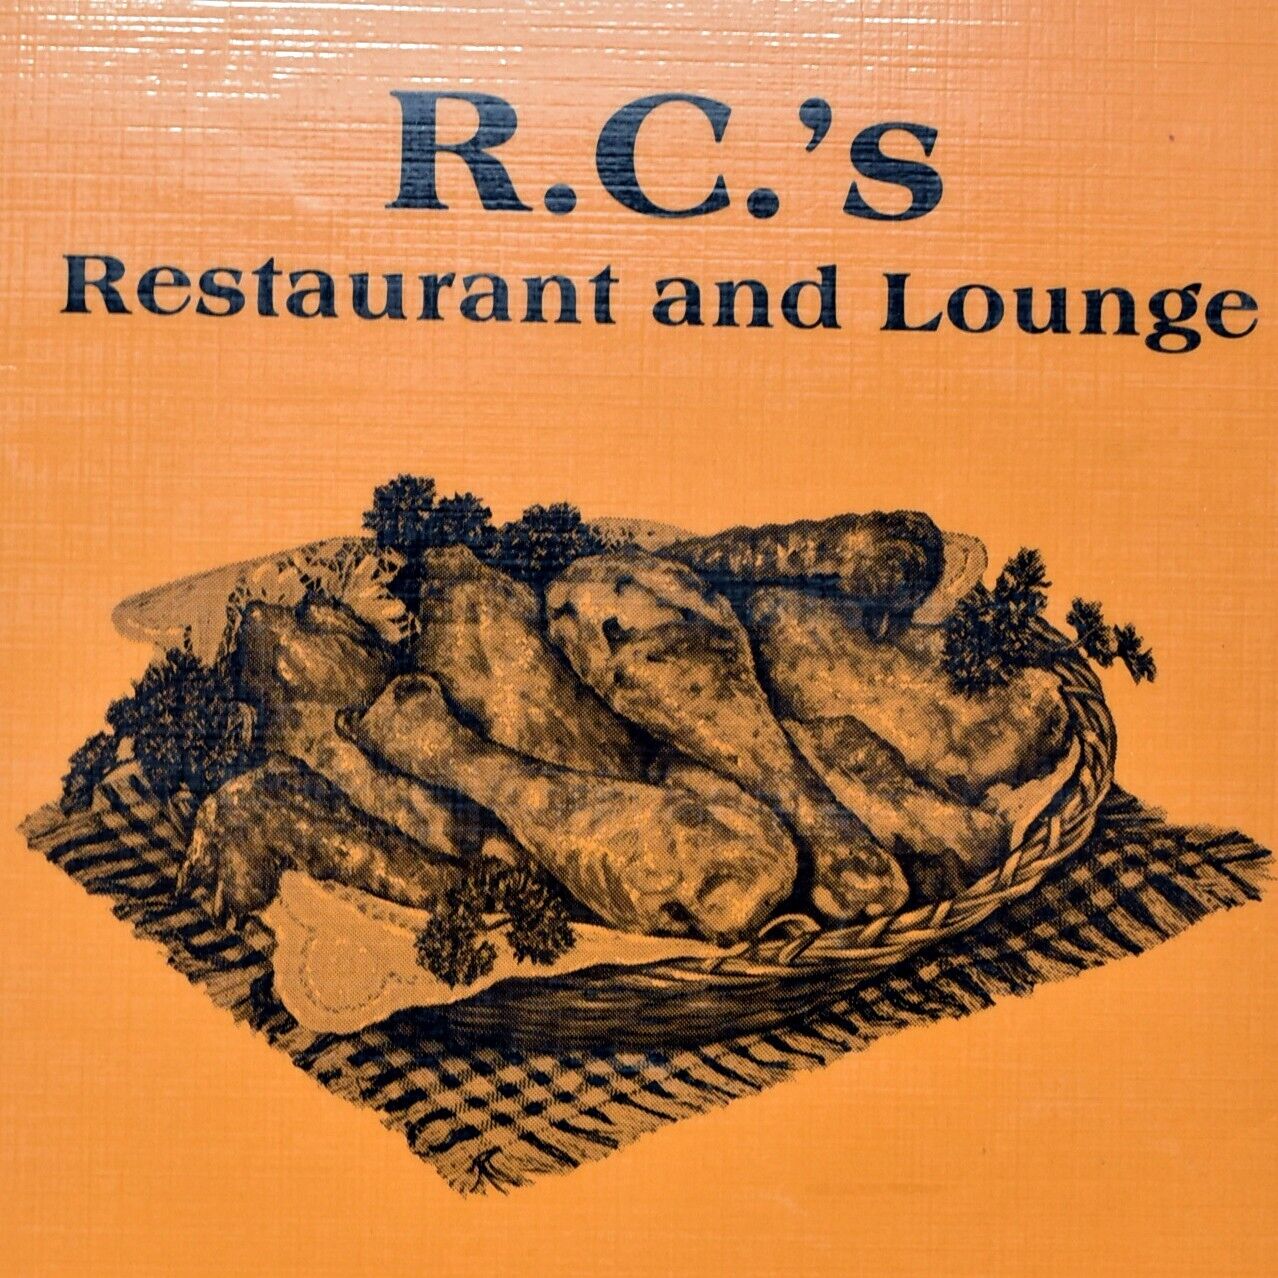 1970s R.C.\'s Restaurant Lounge Menu 411 East 135th Street Kansas City Missouri